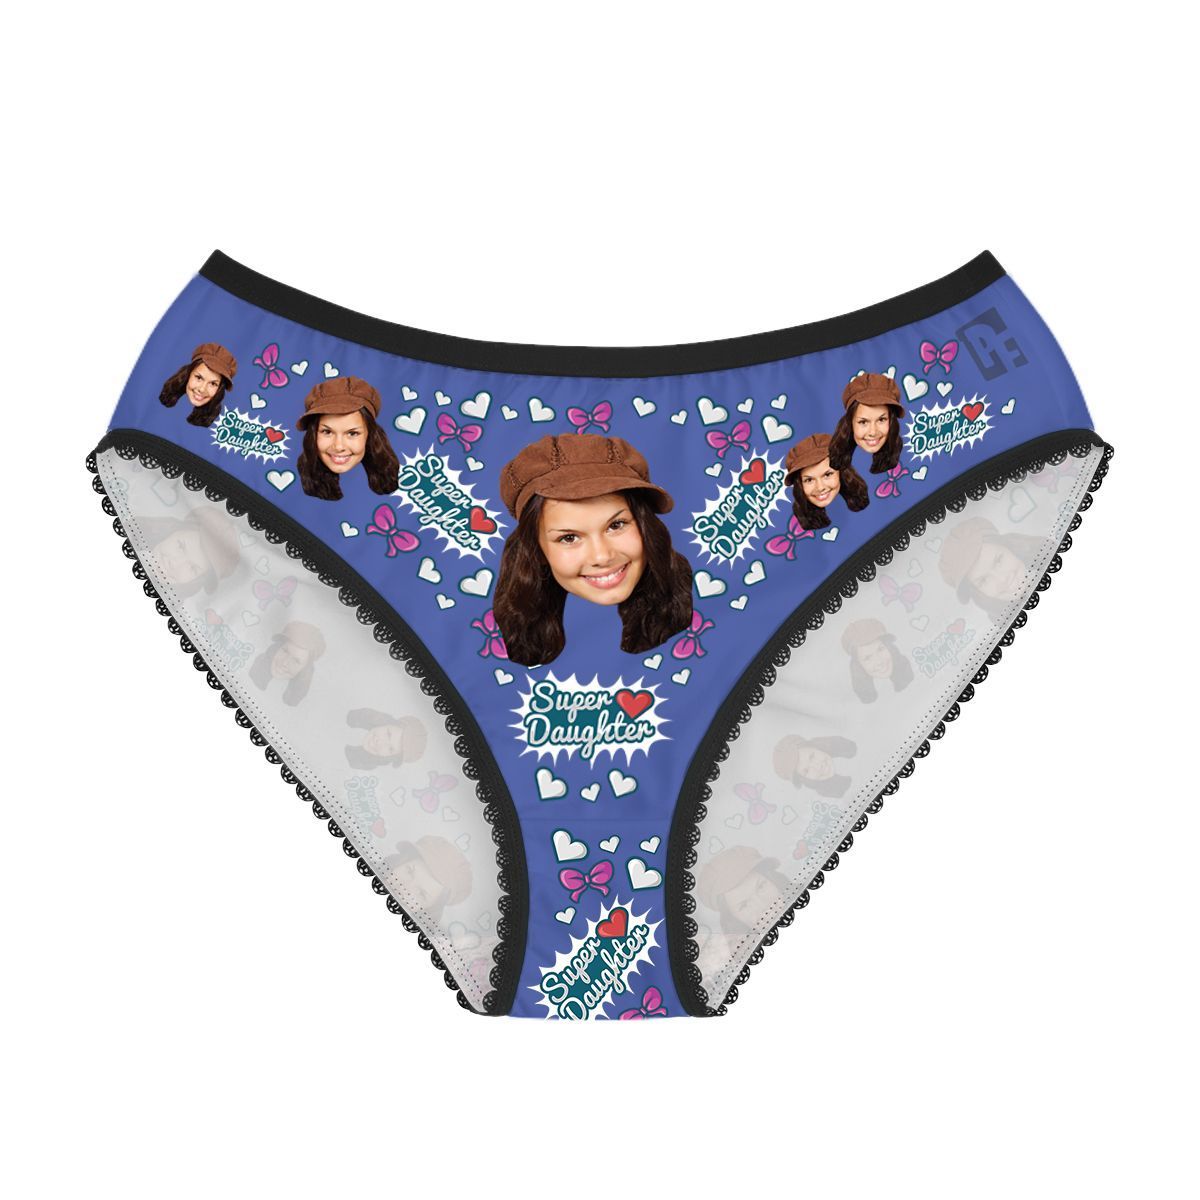 Darkblue Super daughter women's underwear briefs personalized with photo printed on them